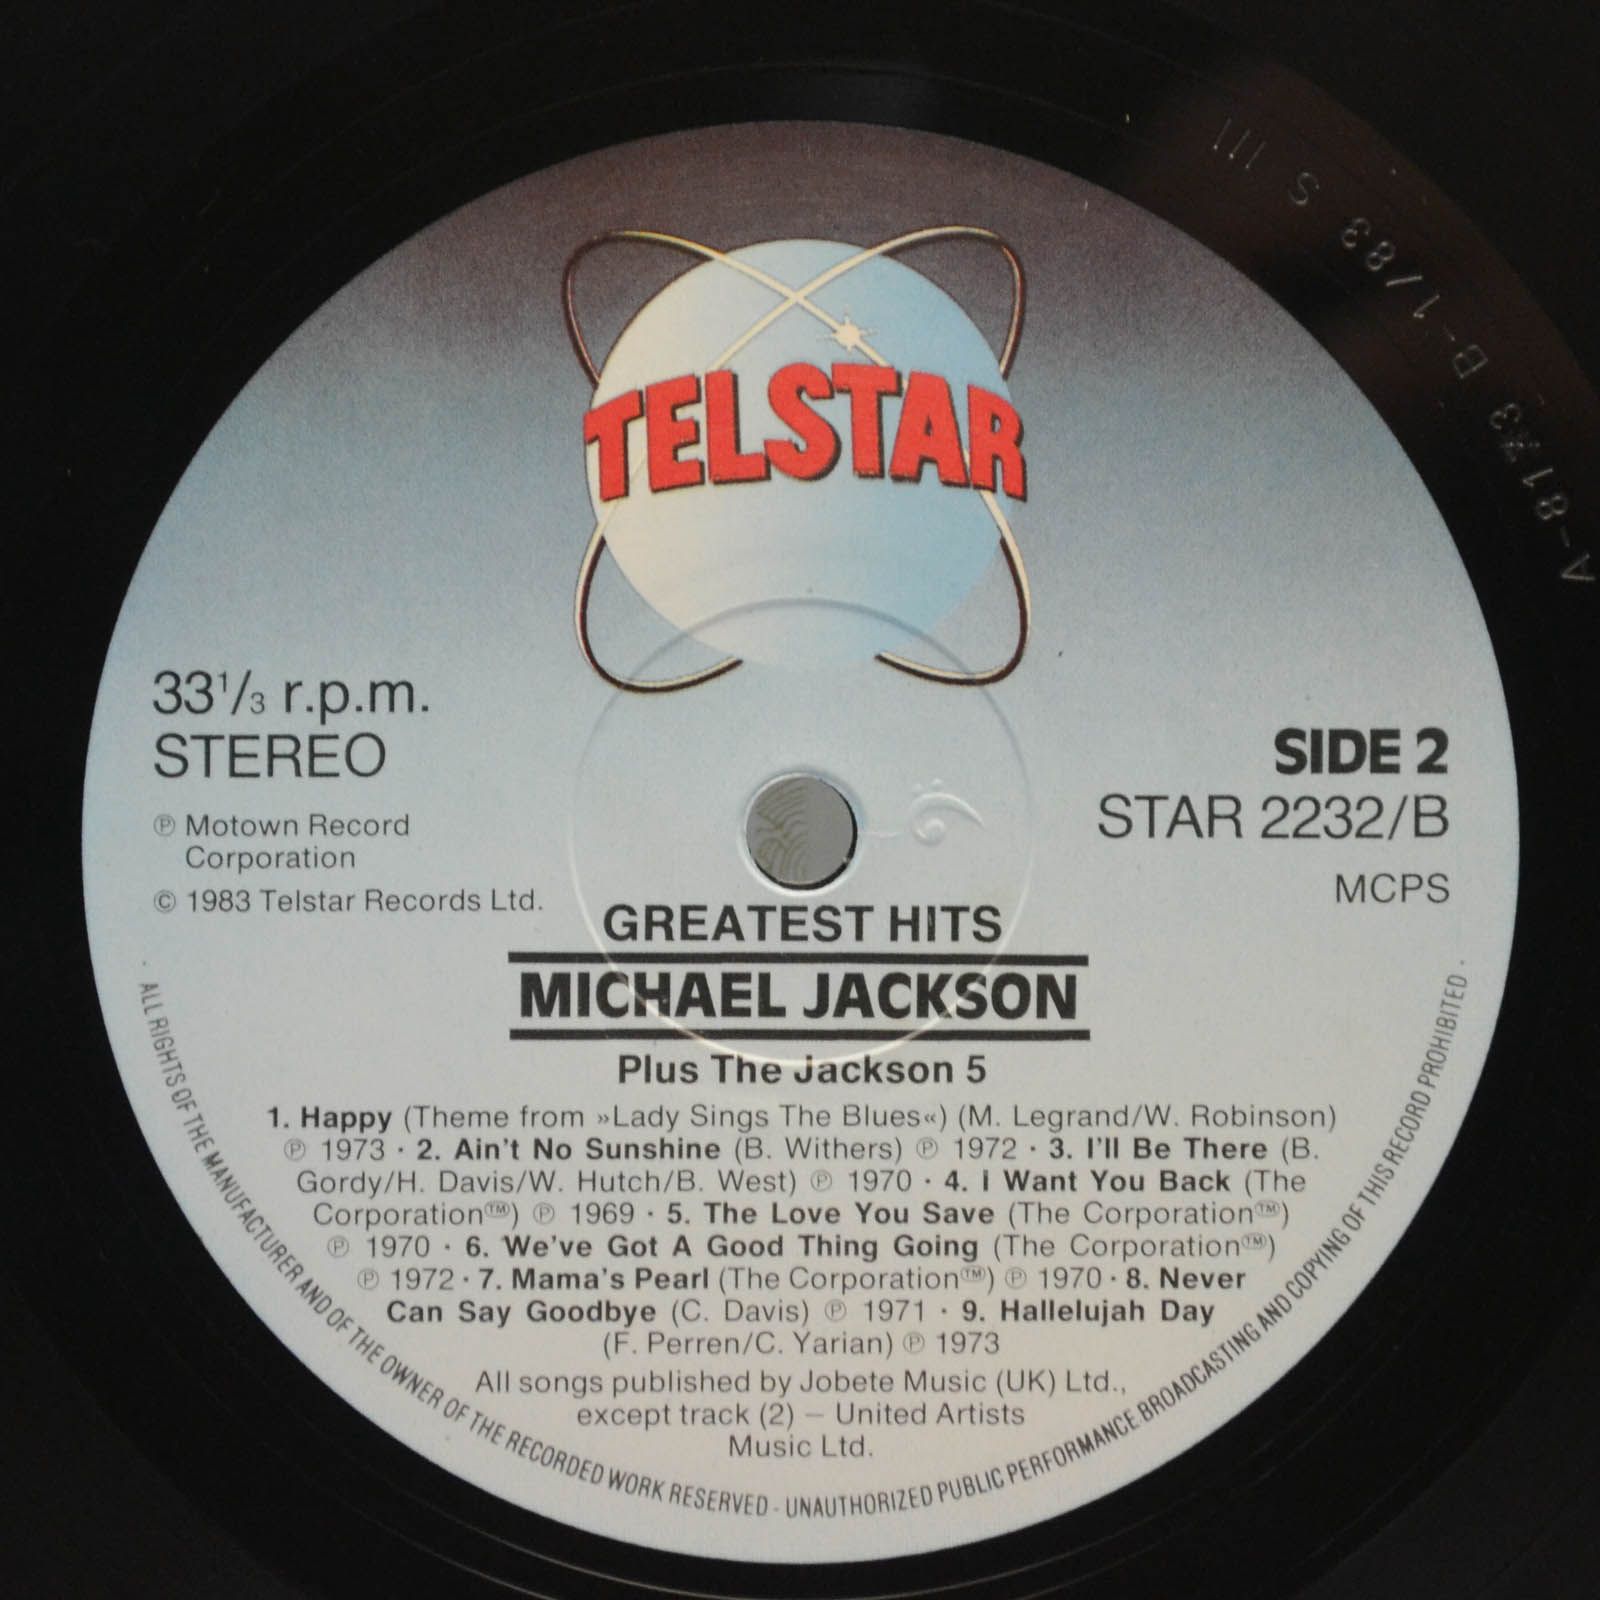 Michael Jackson Plus The Jackson 5 — 18 Greatest Hits (UK), 1983